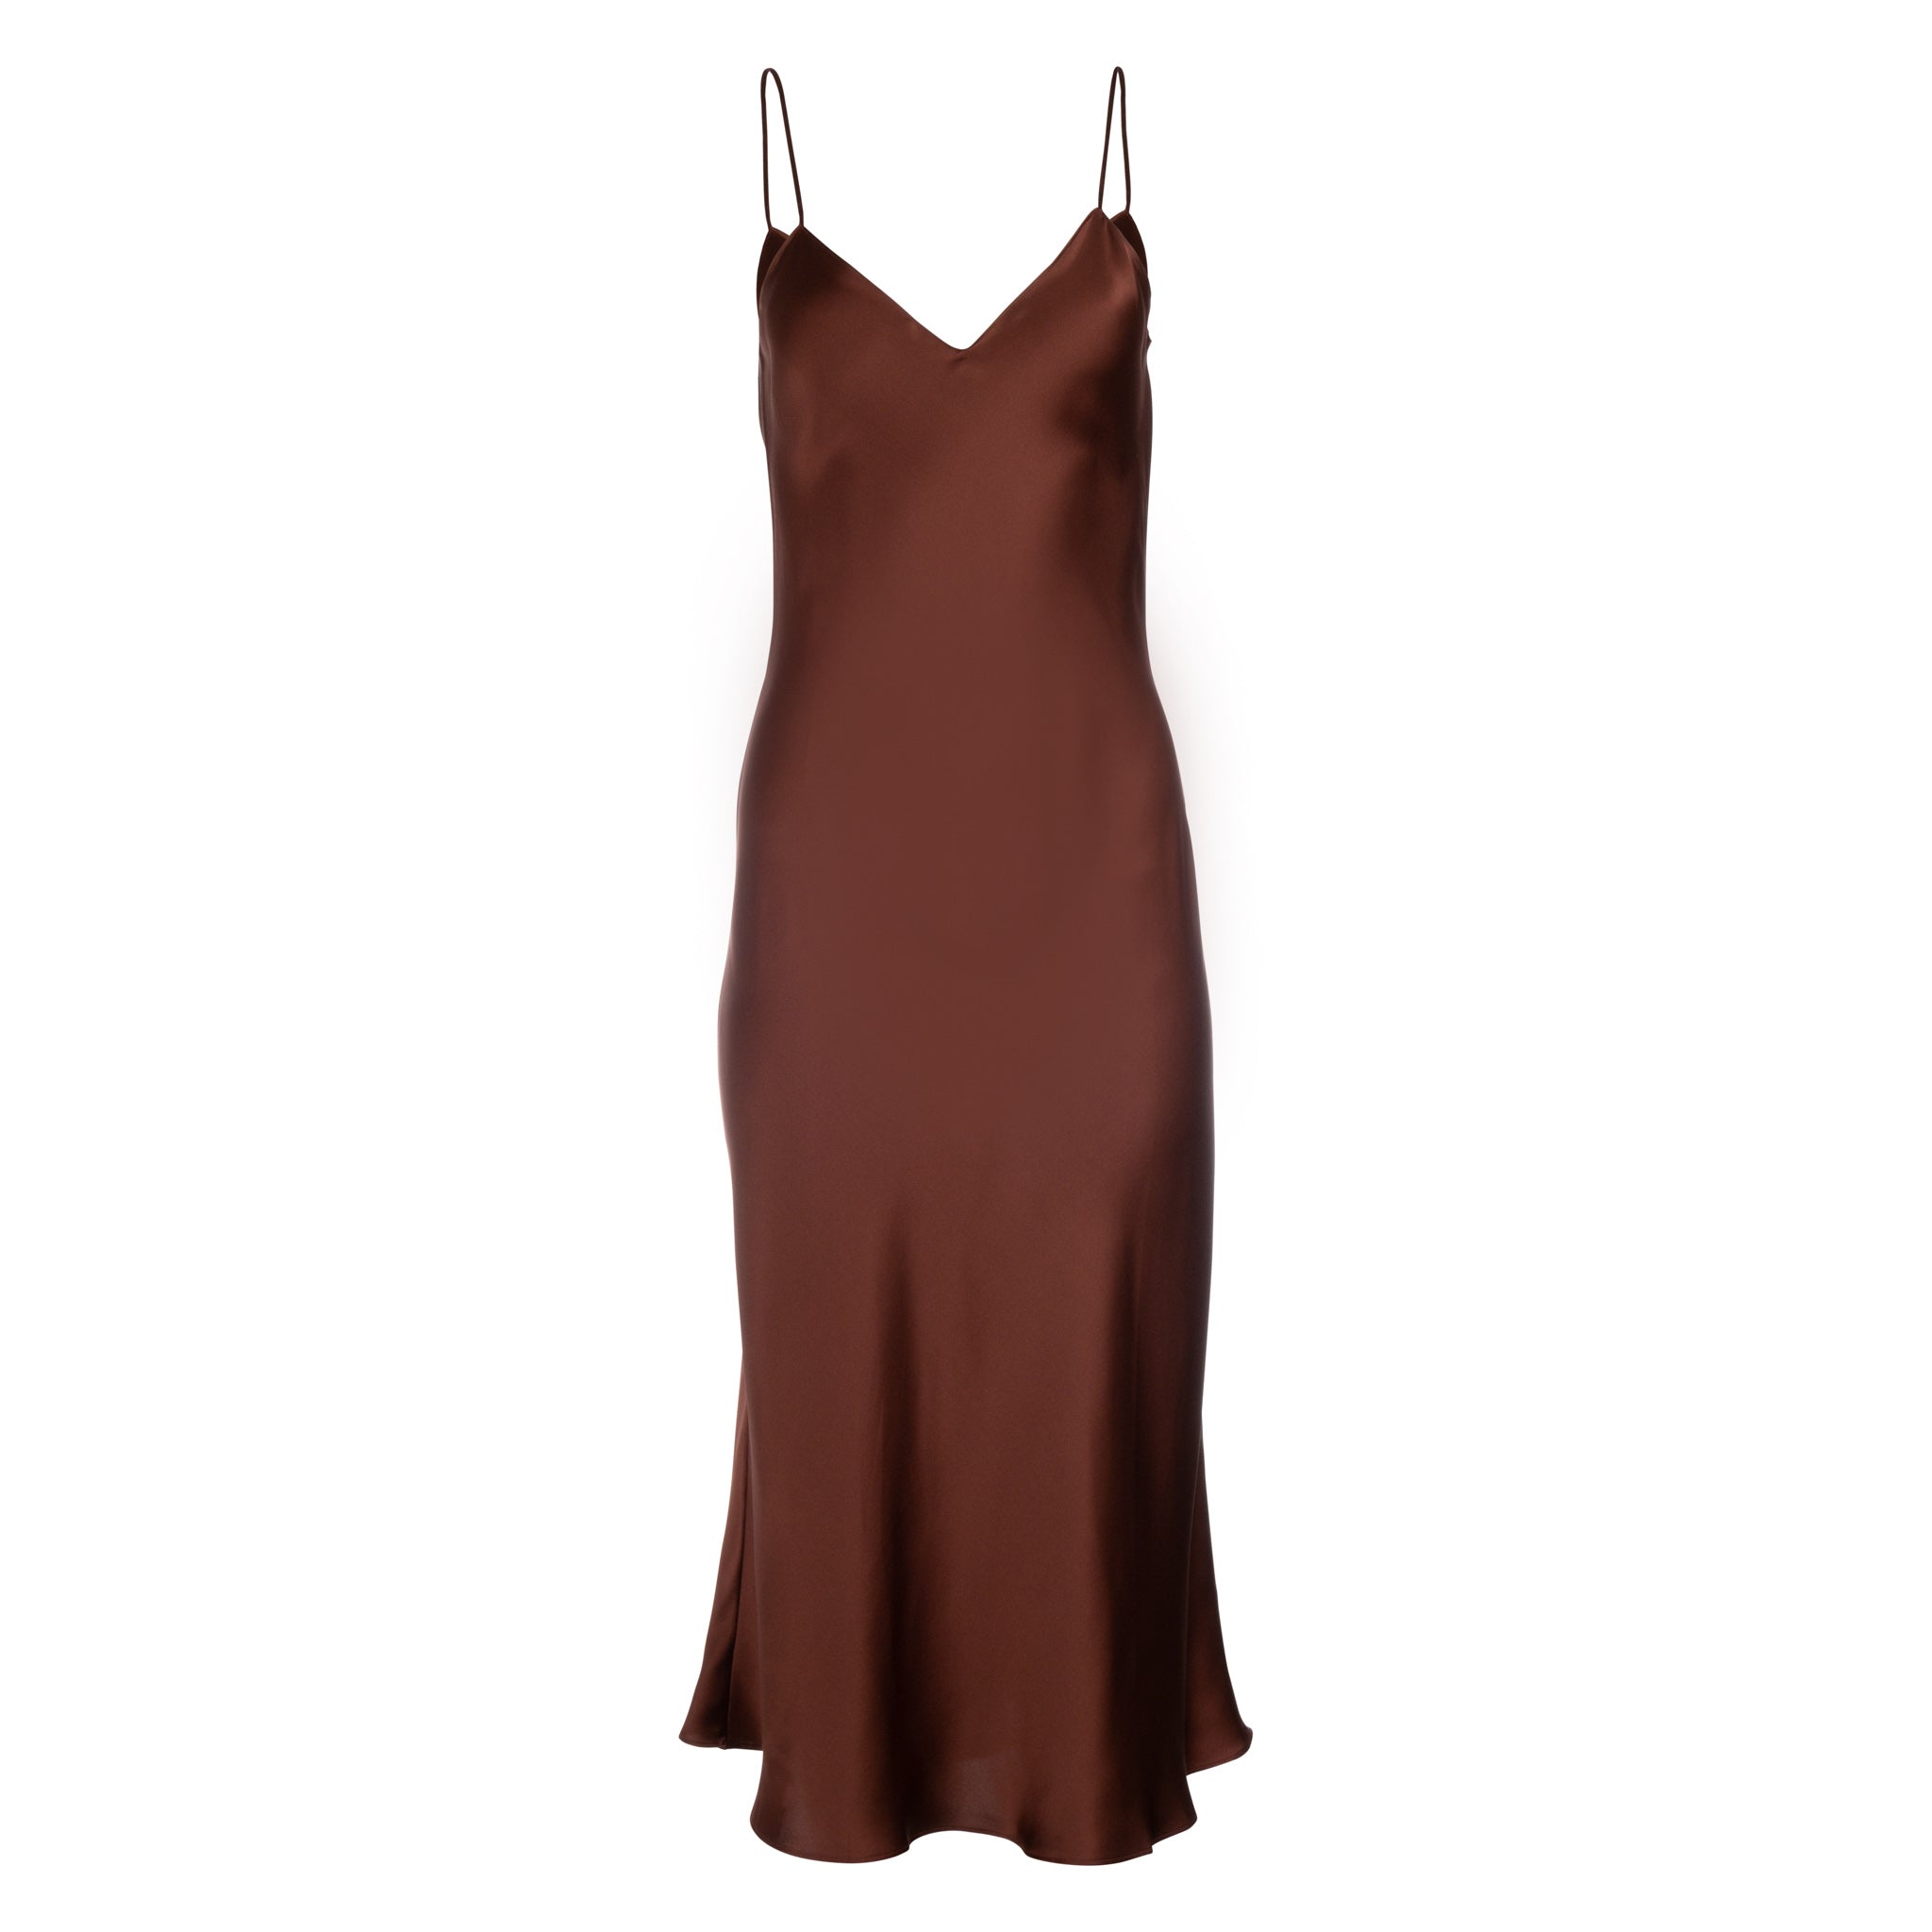 Long Sleeve Satin Slip Dress in Cocoa Brown